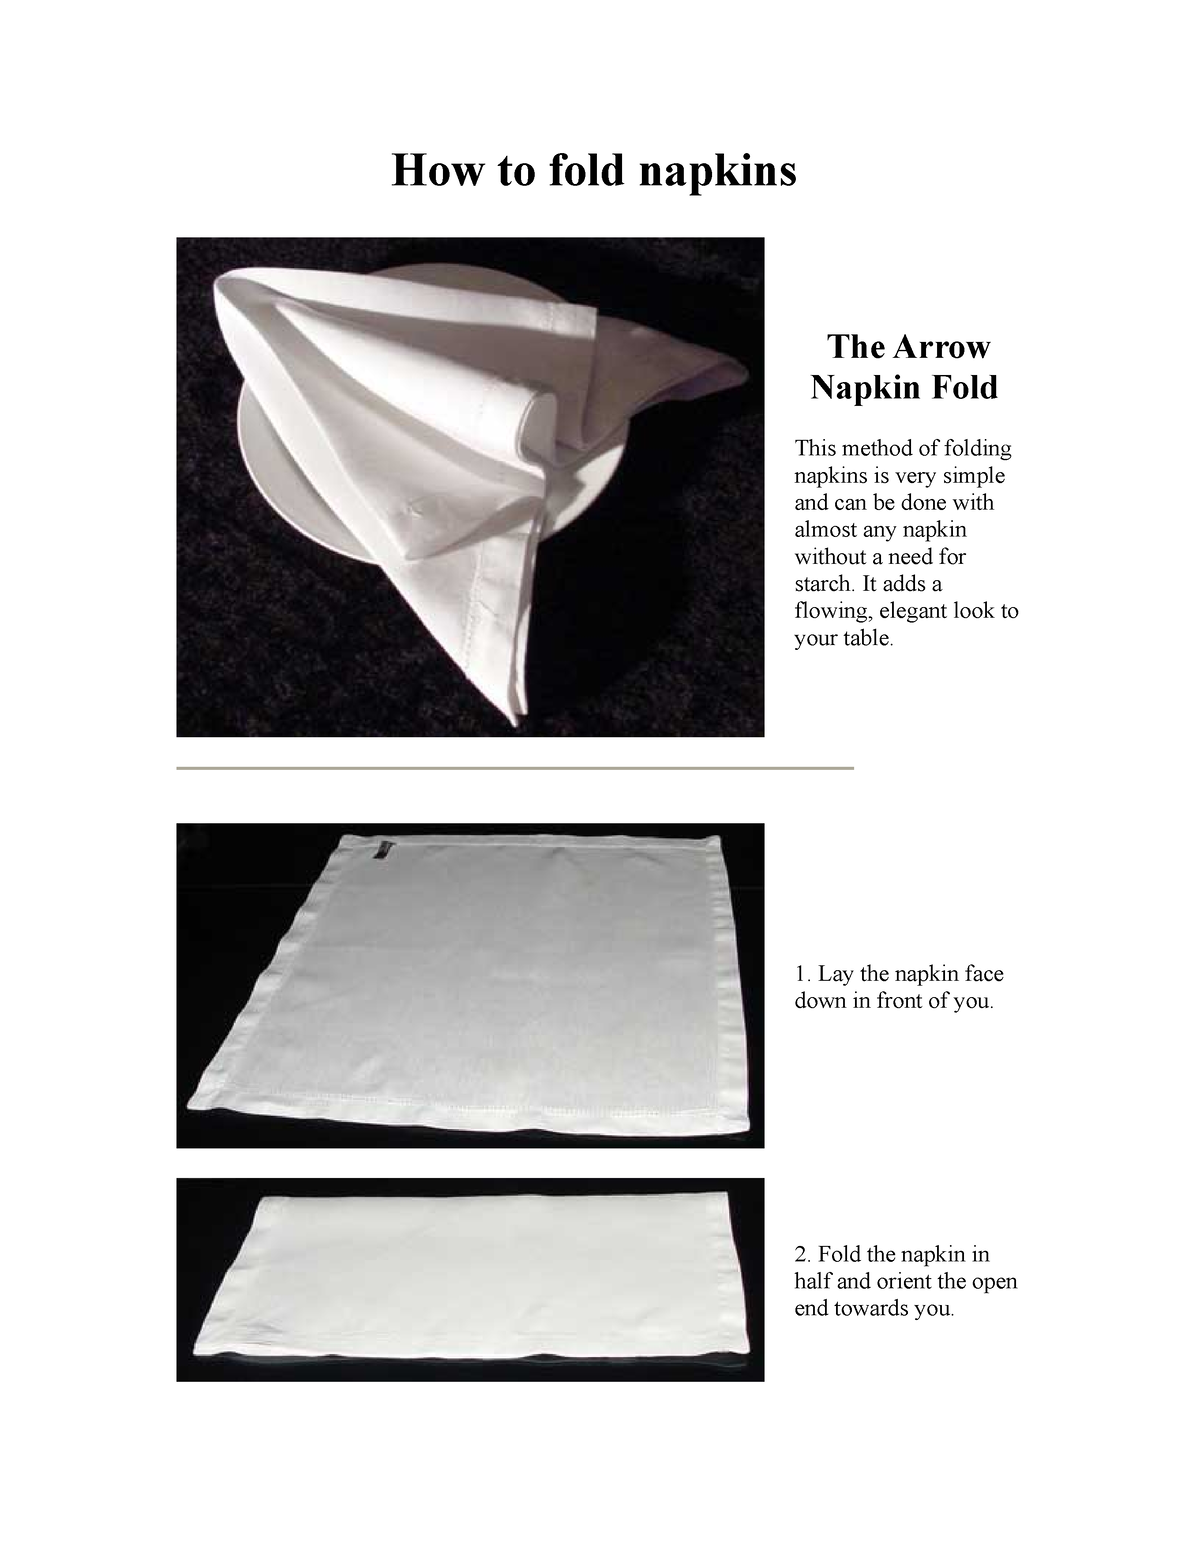 7.How to fold napkins - notes - How to fold napkins The Arrow Napkin ...